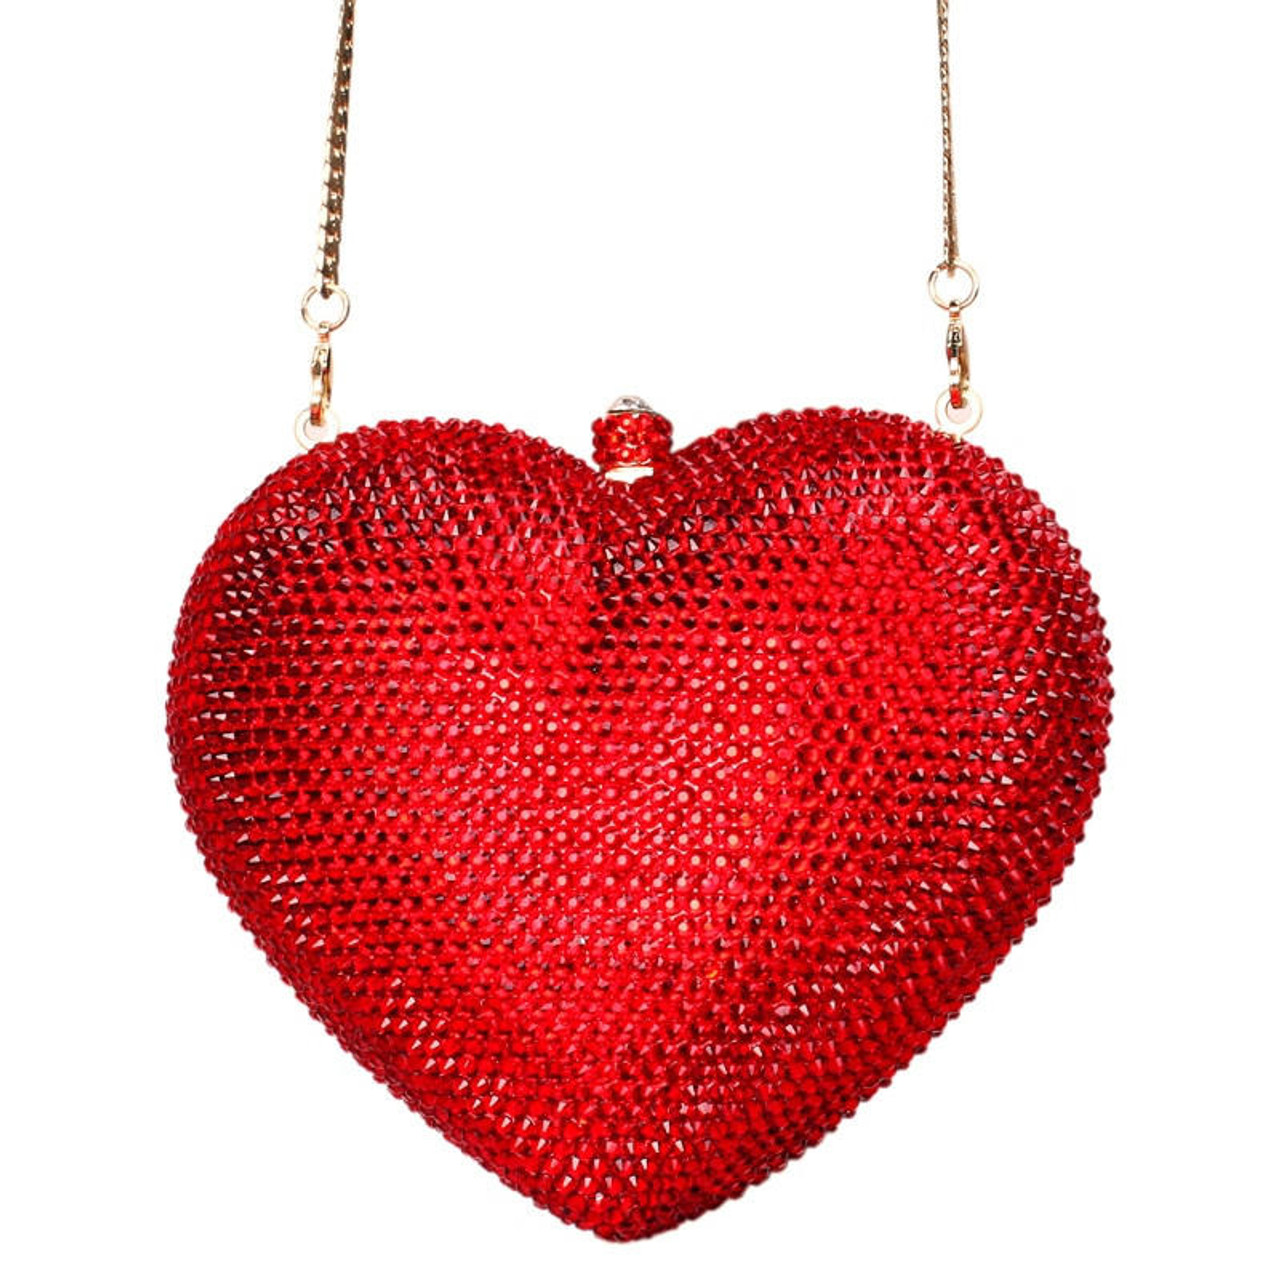 Anthony David Crystal Handbag - Red Heart